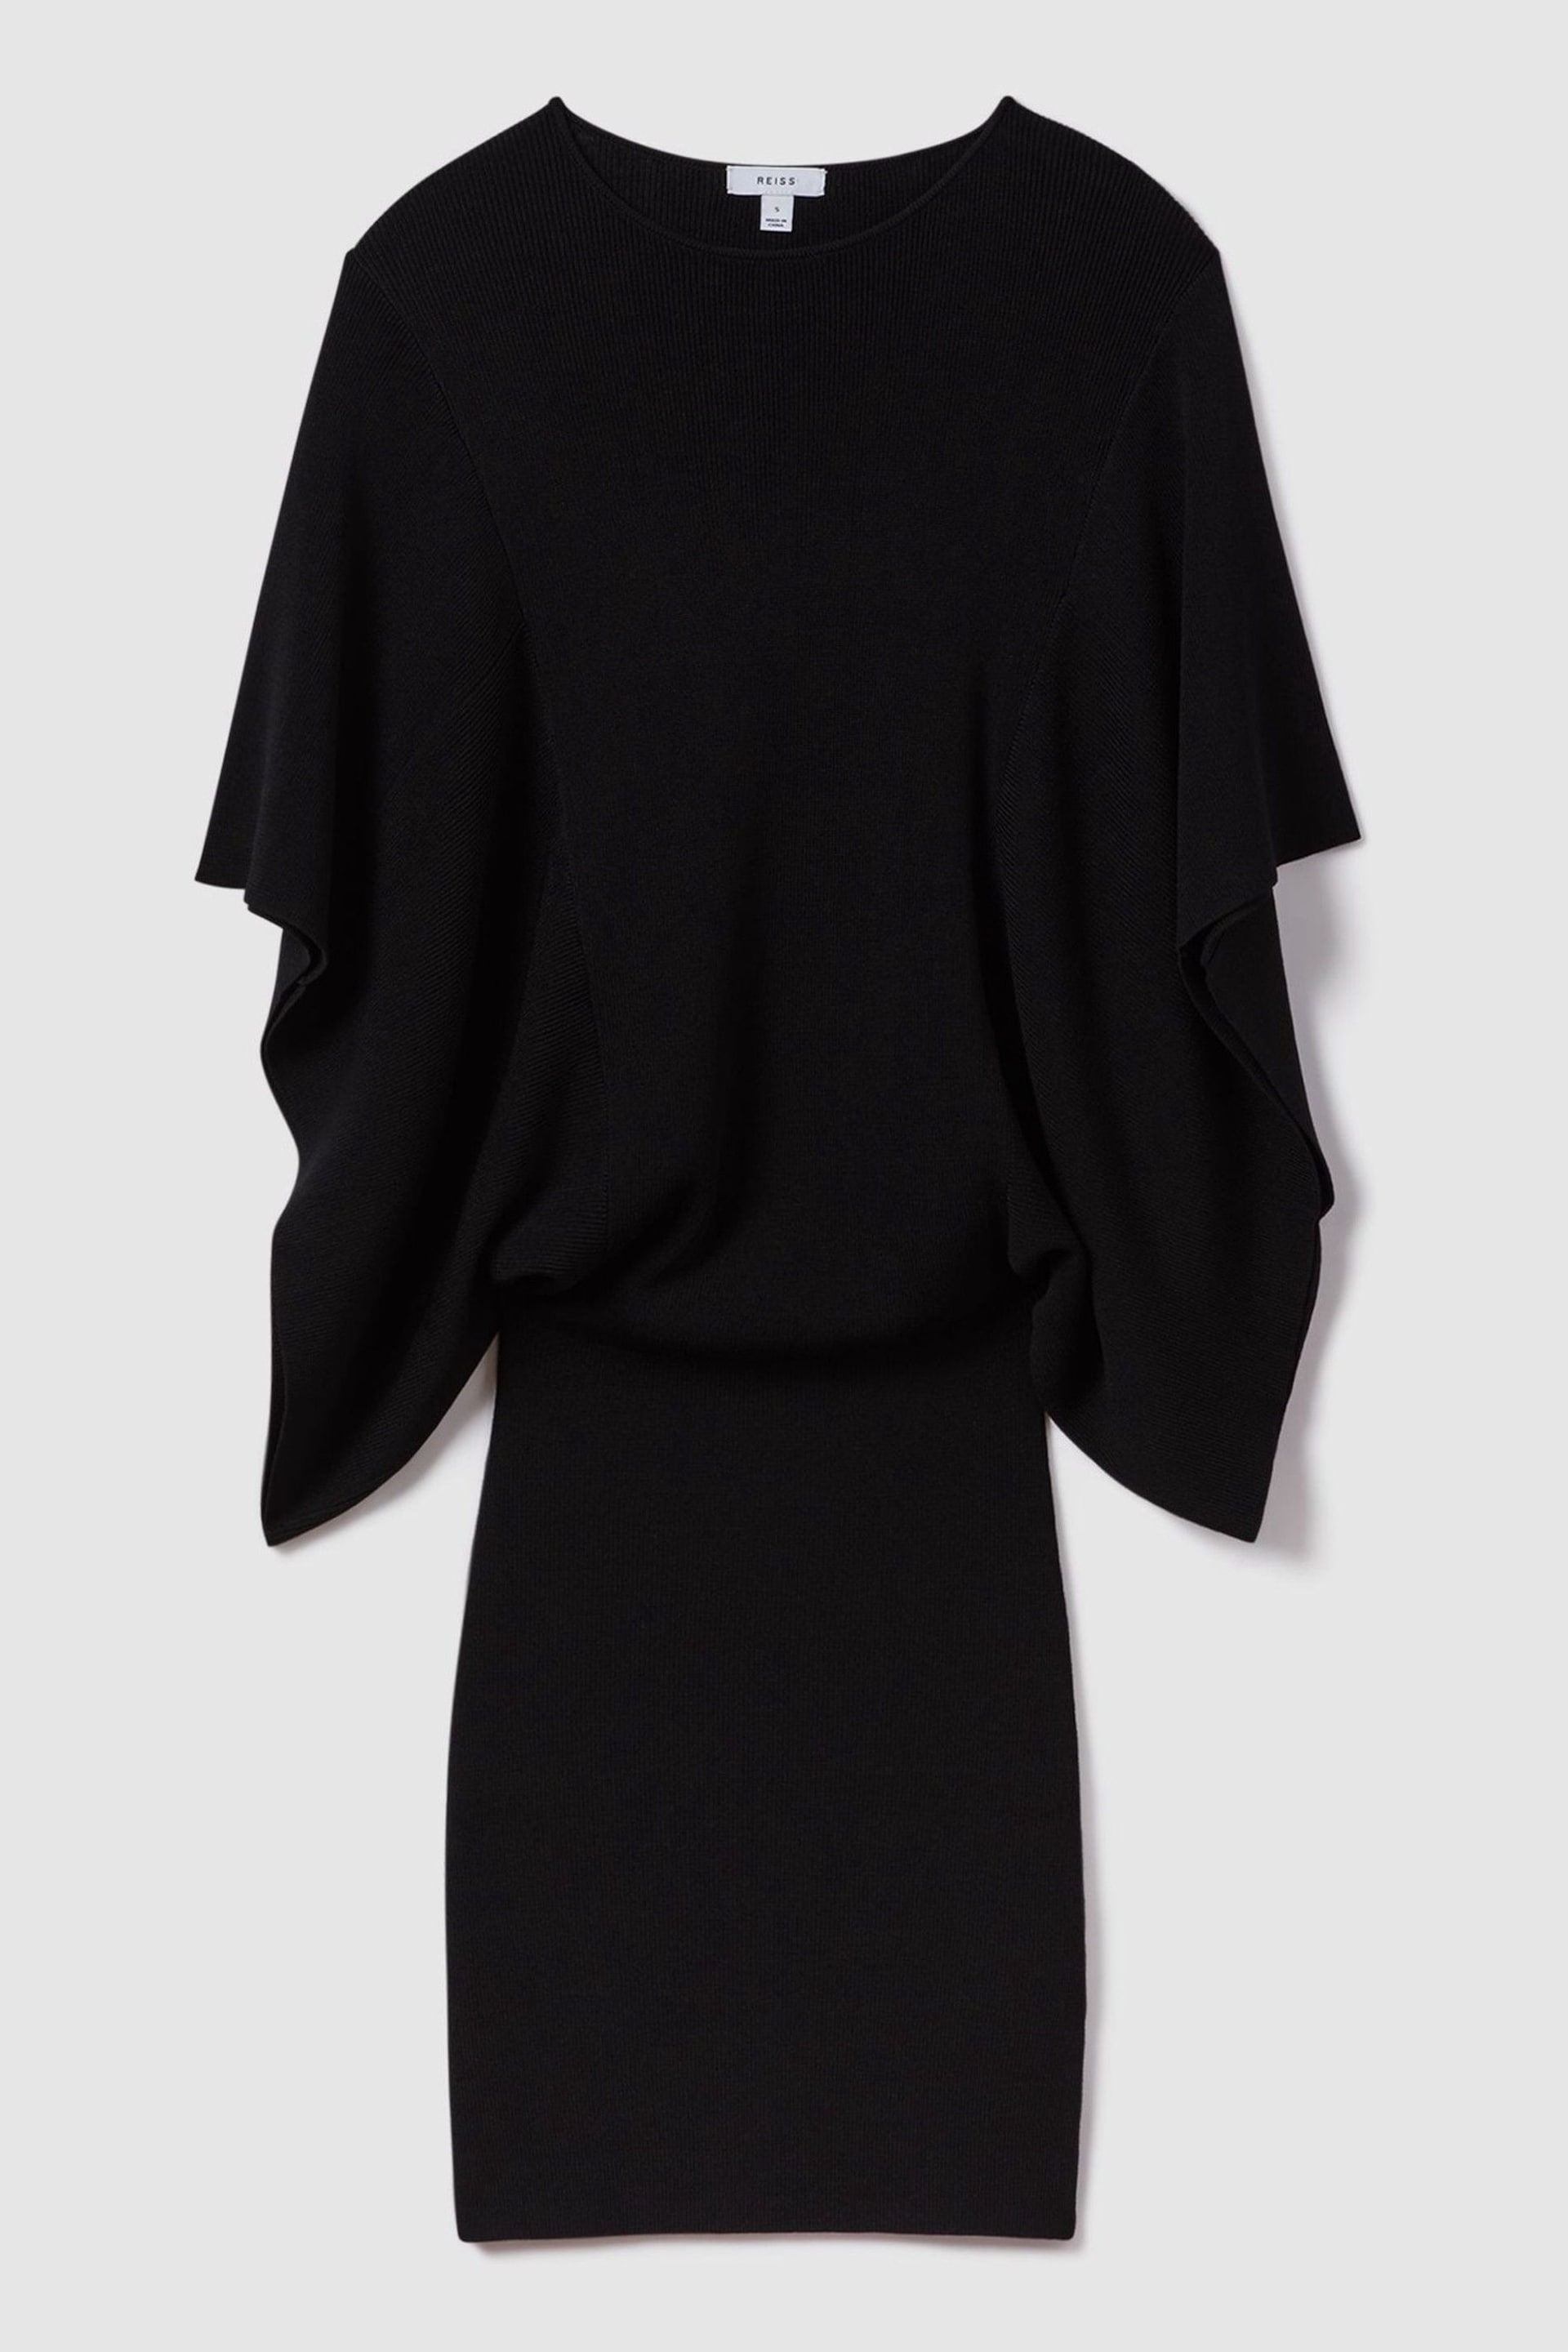 Reiss Black Julia Knitted Cape Sleeve Mini Dress - Image 2 of 6